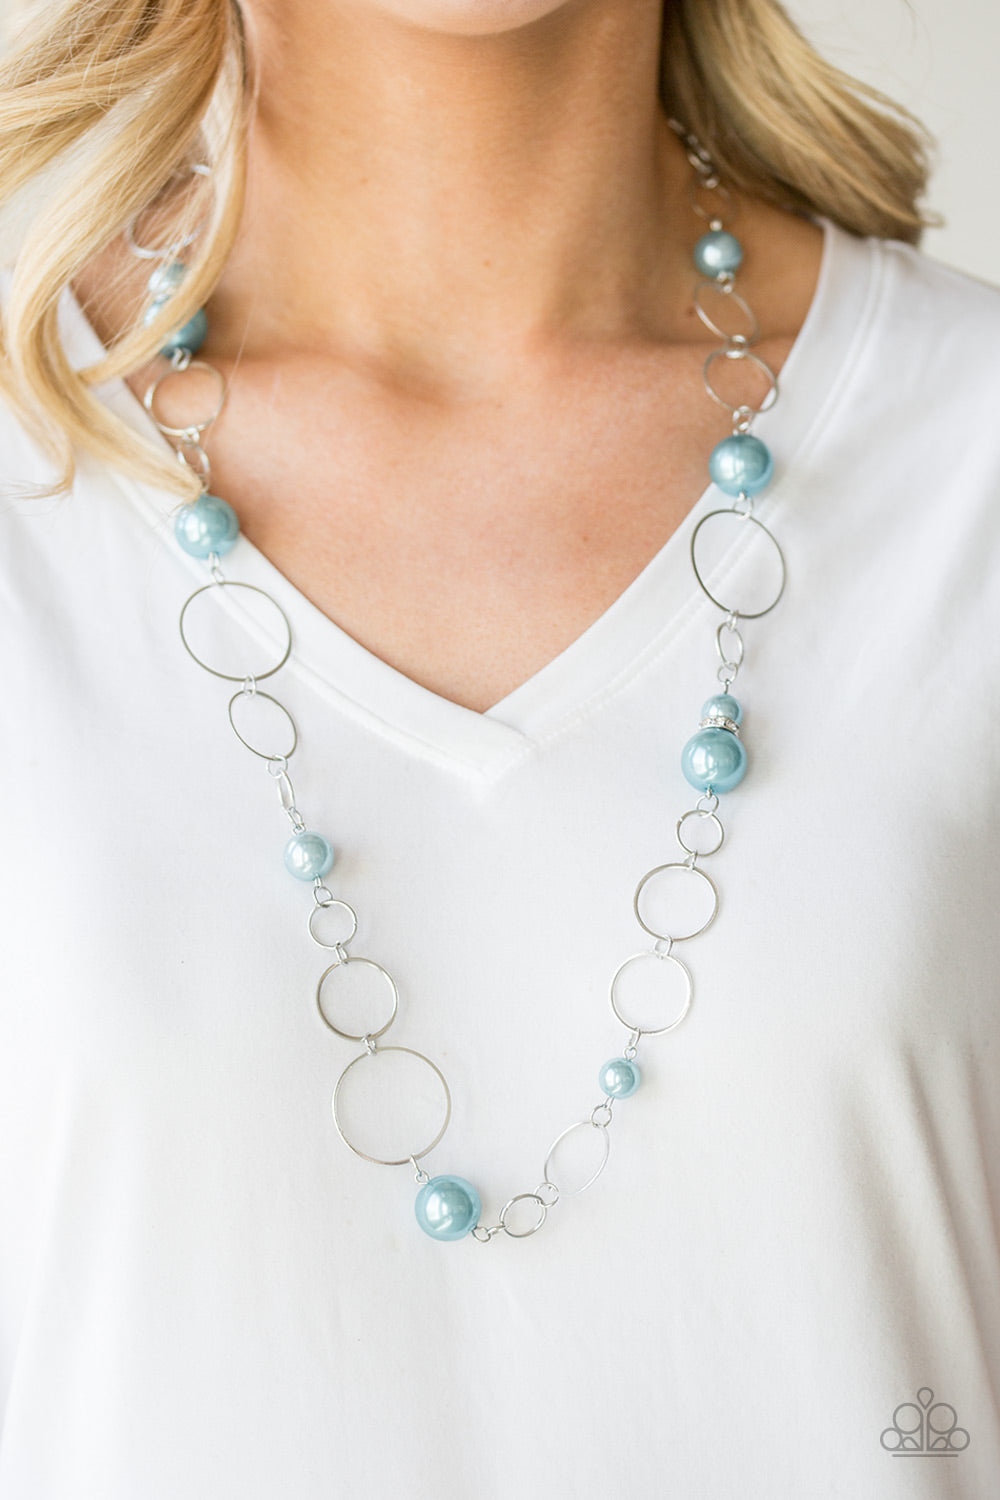 Lovely Lady Luck - Blue necklace